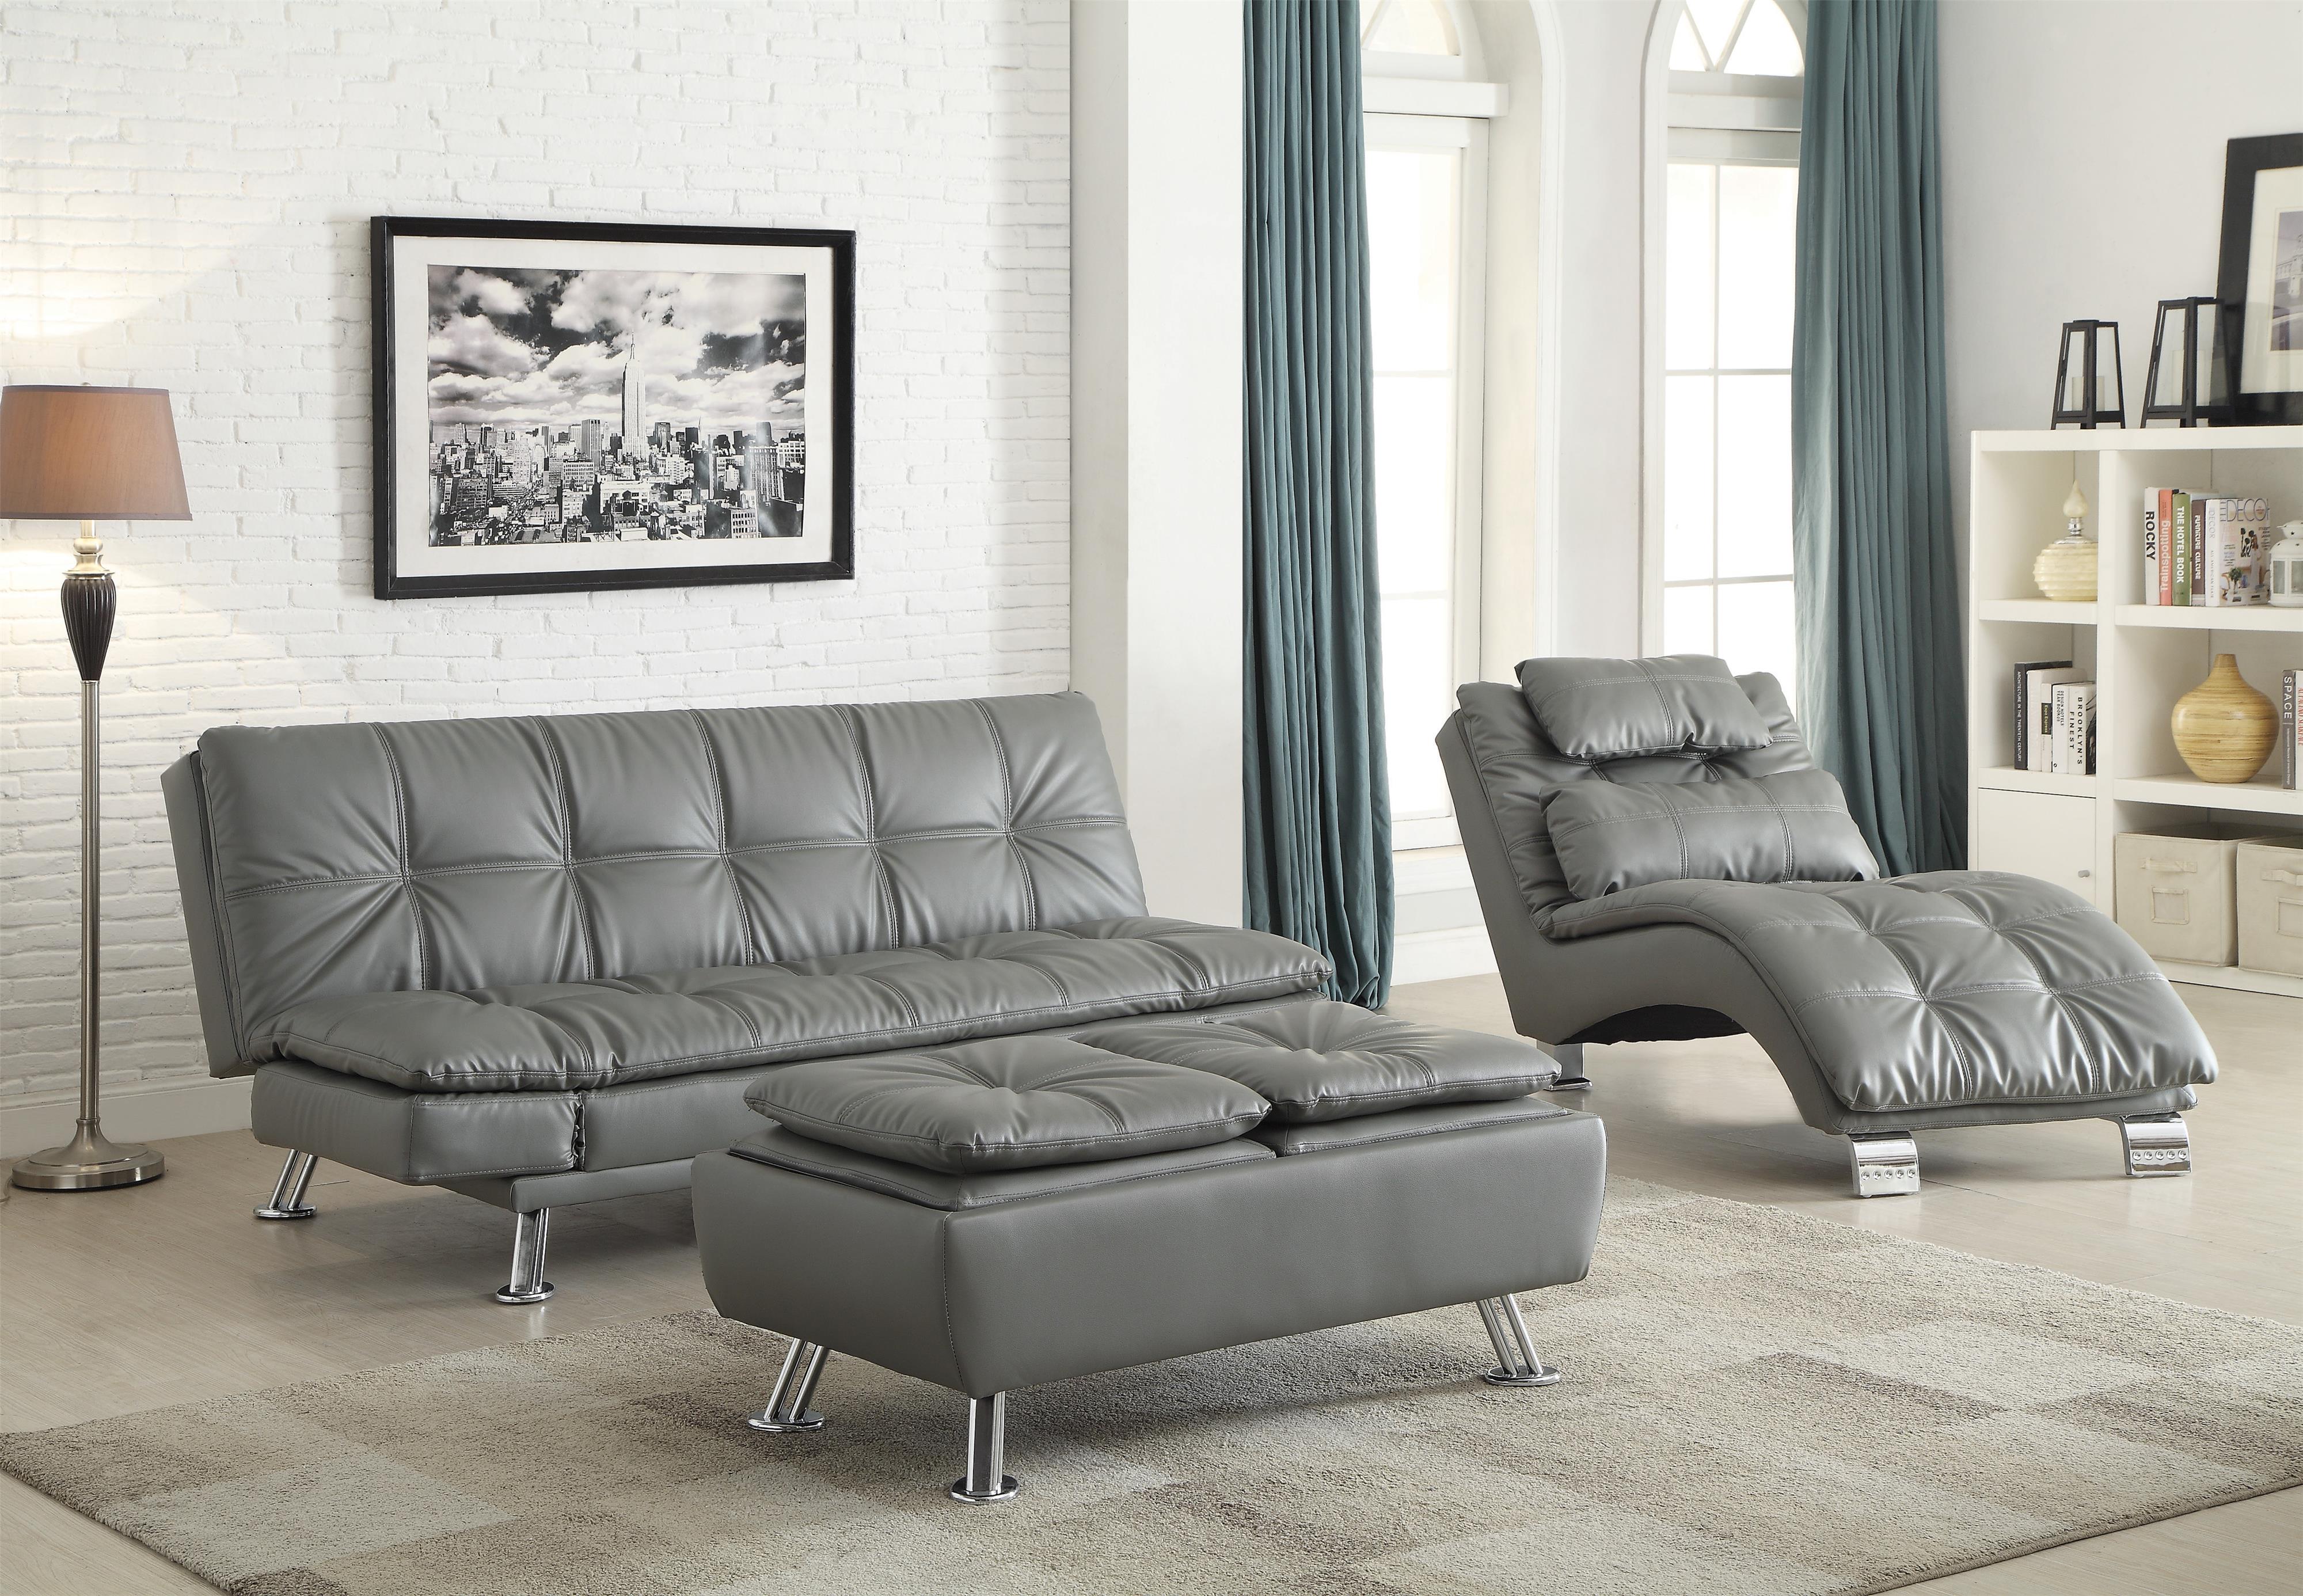 Dilleston Sofa Bed Genesis Furniture, Futon Living Room Sets